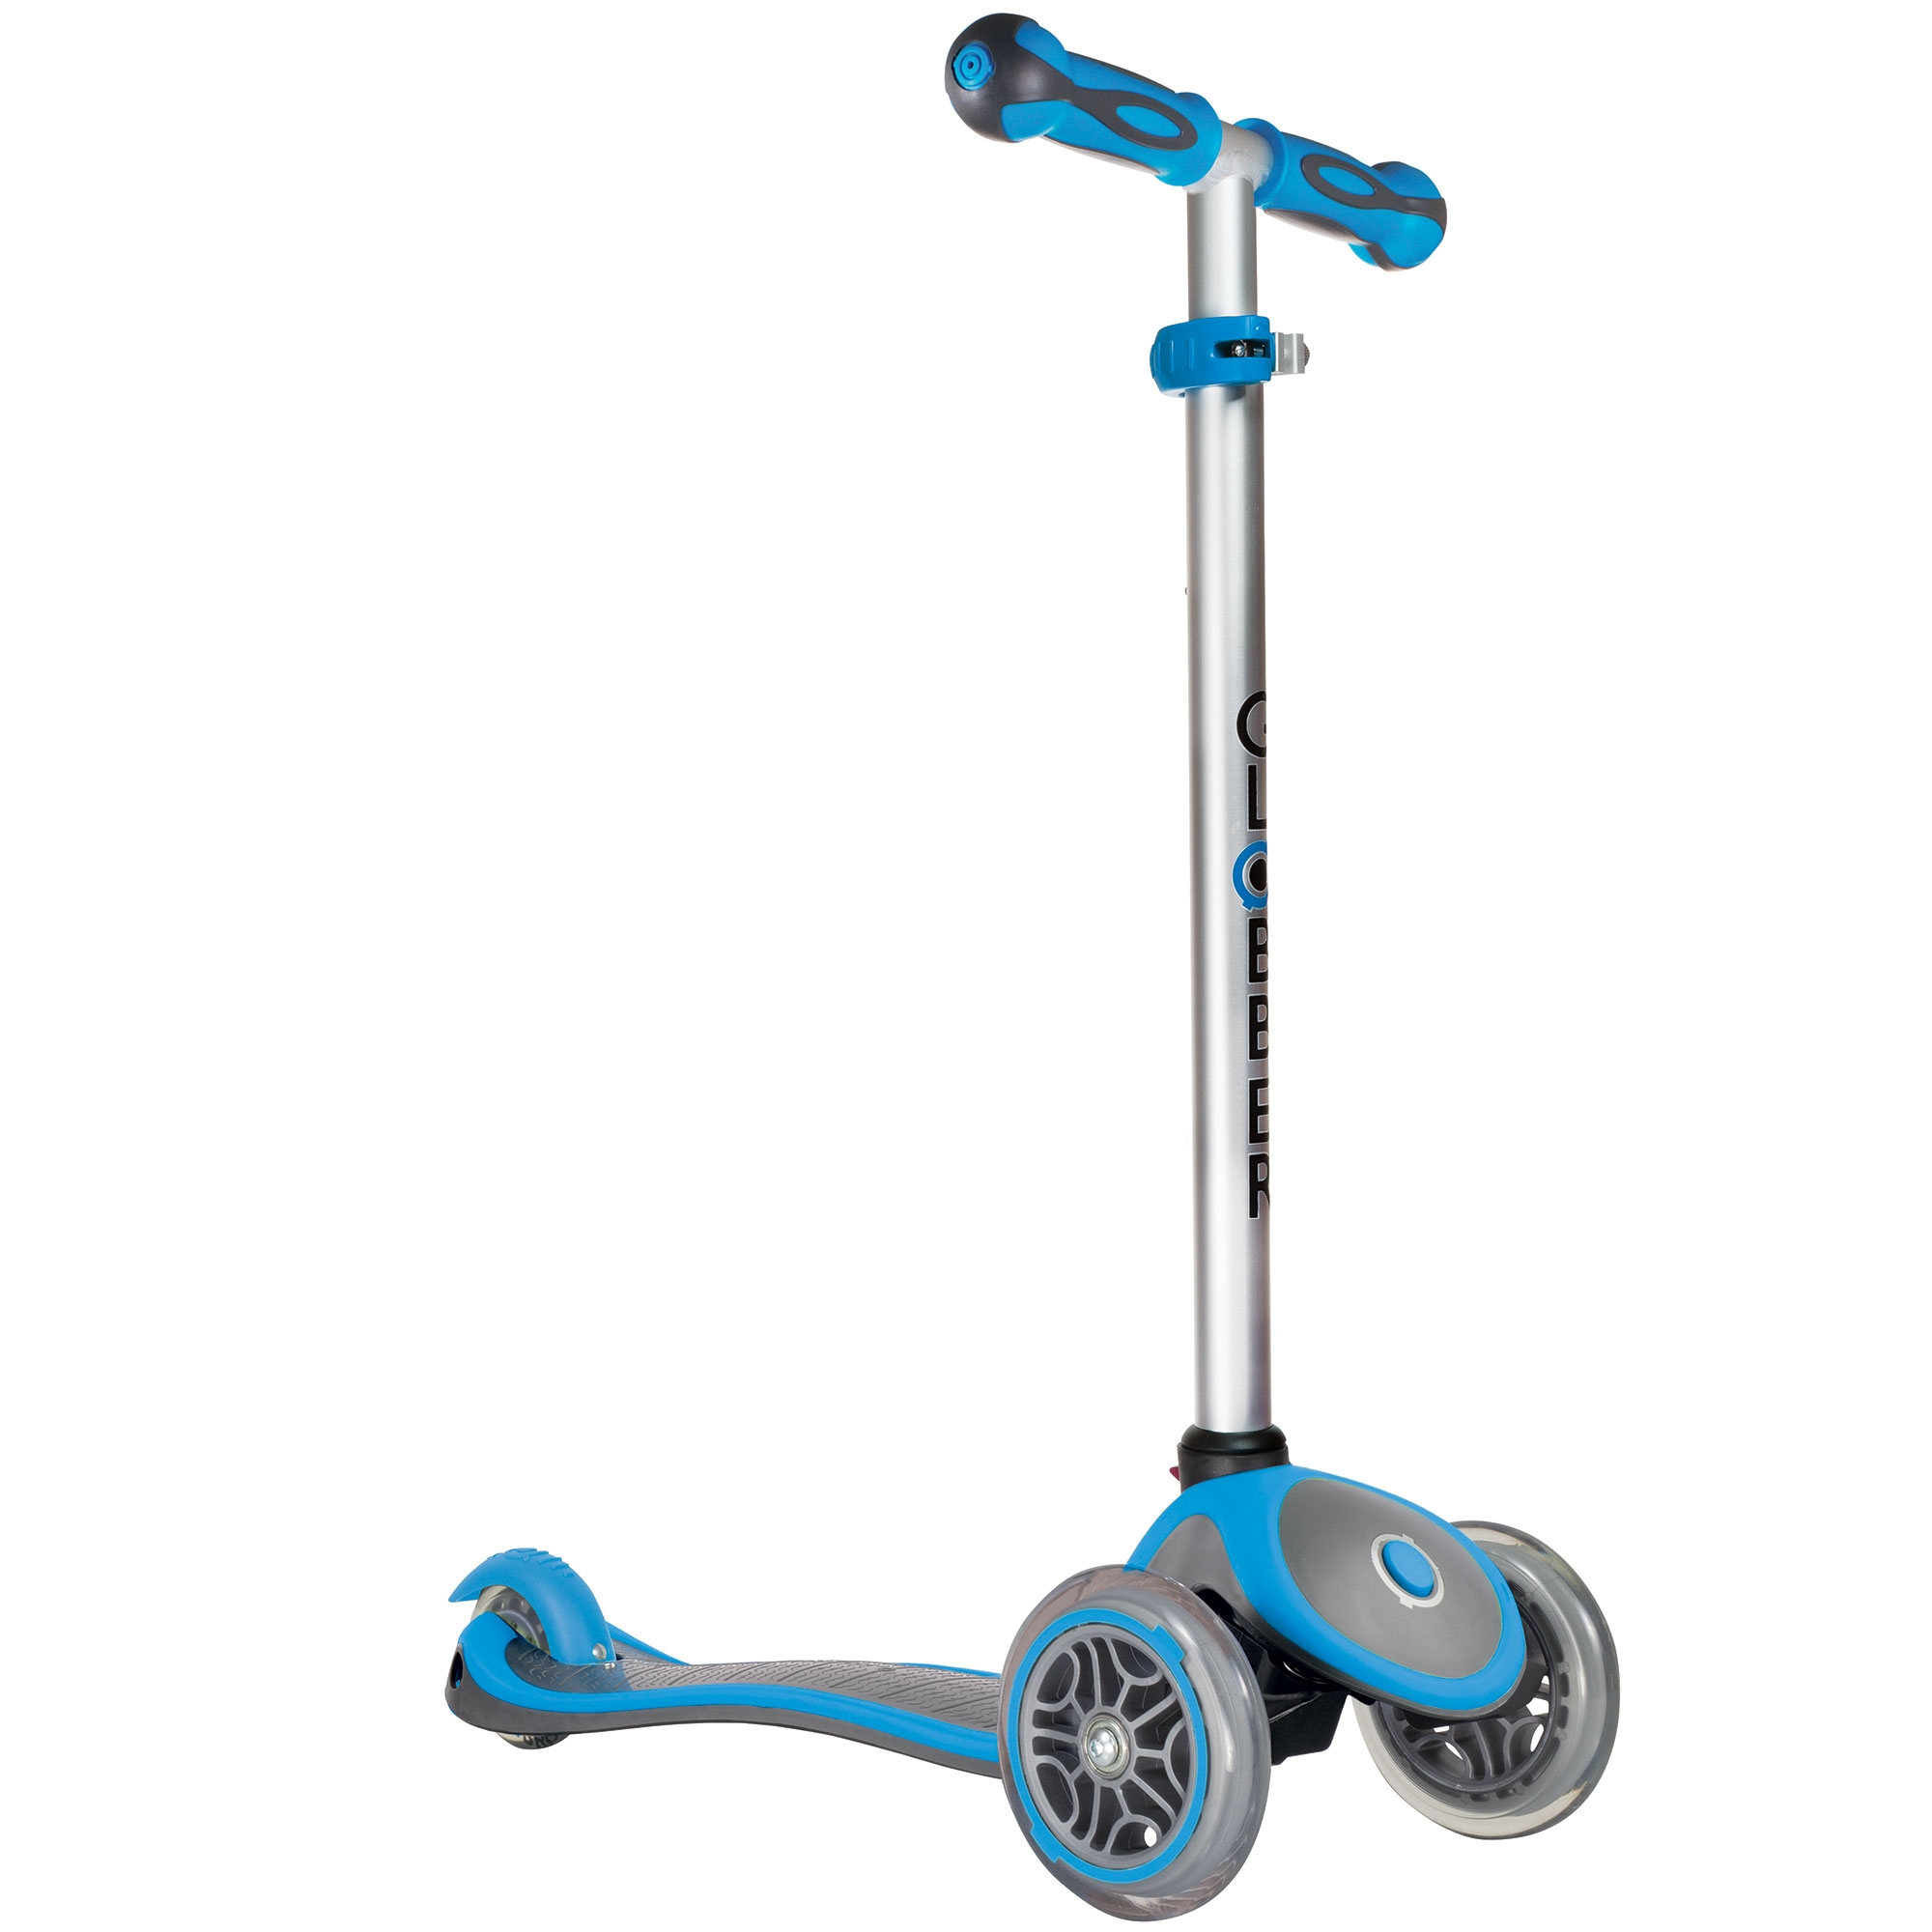 Globber Evo 4 in 1 Plus Kids Adjustable Scooter Neon Blue | eBay